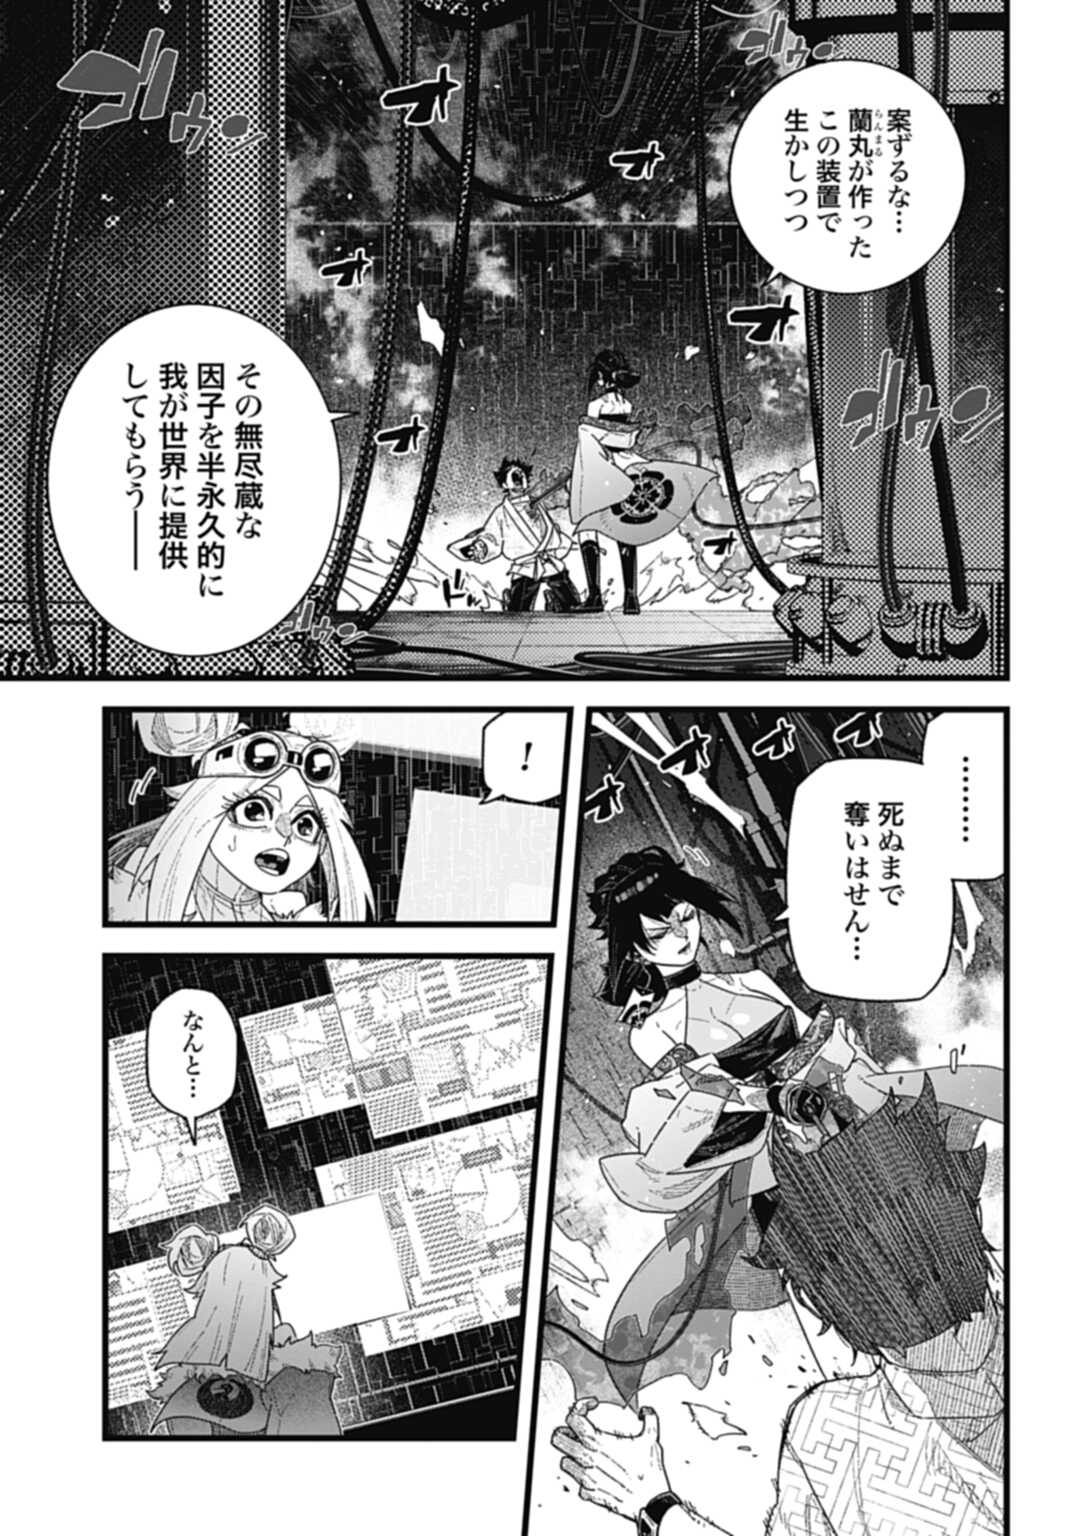 Nobunaga Multiverse - Chapter 9.1 - Page 5